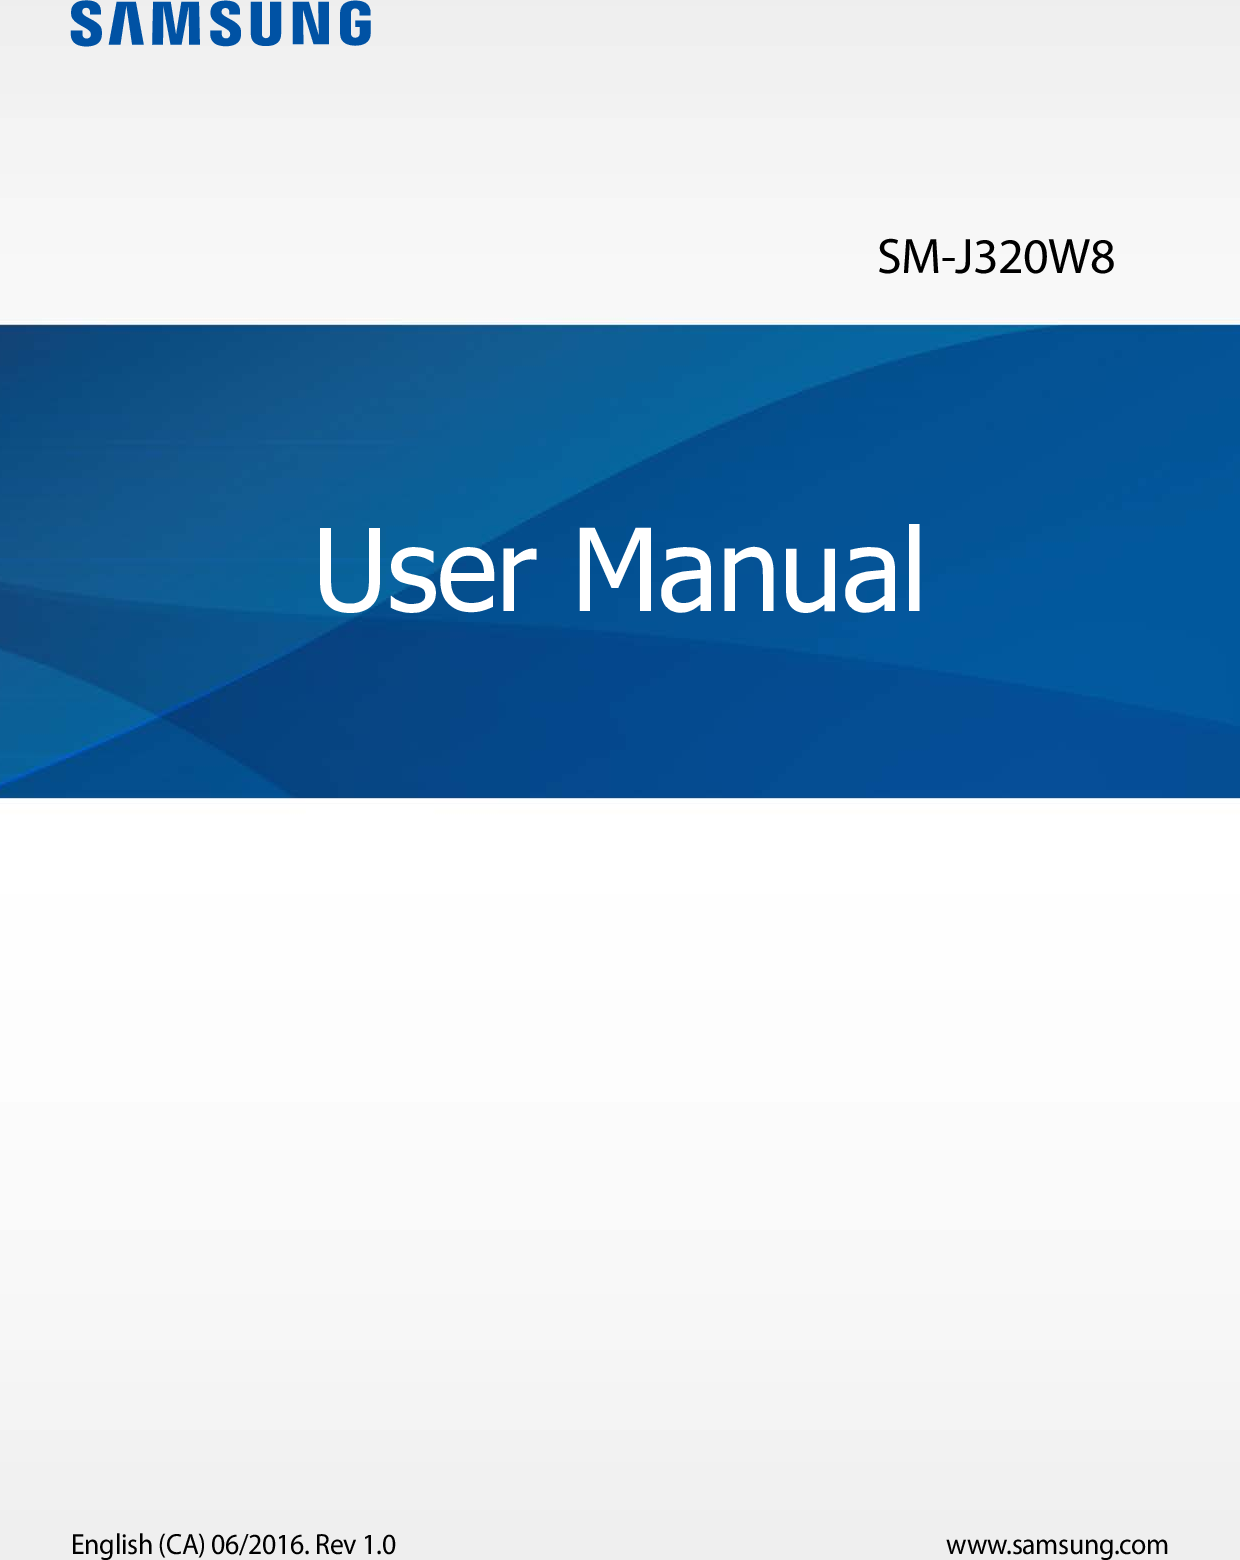 samsung sm j320w8 user manual